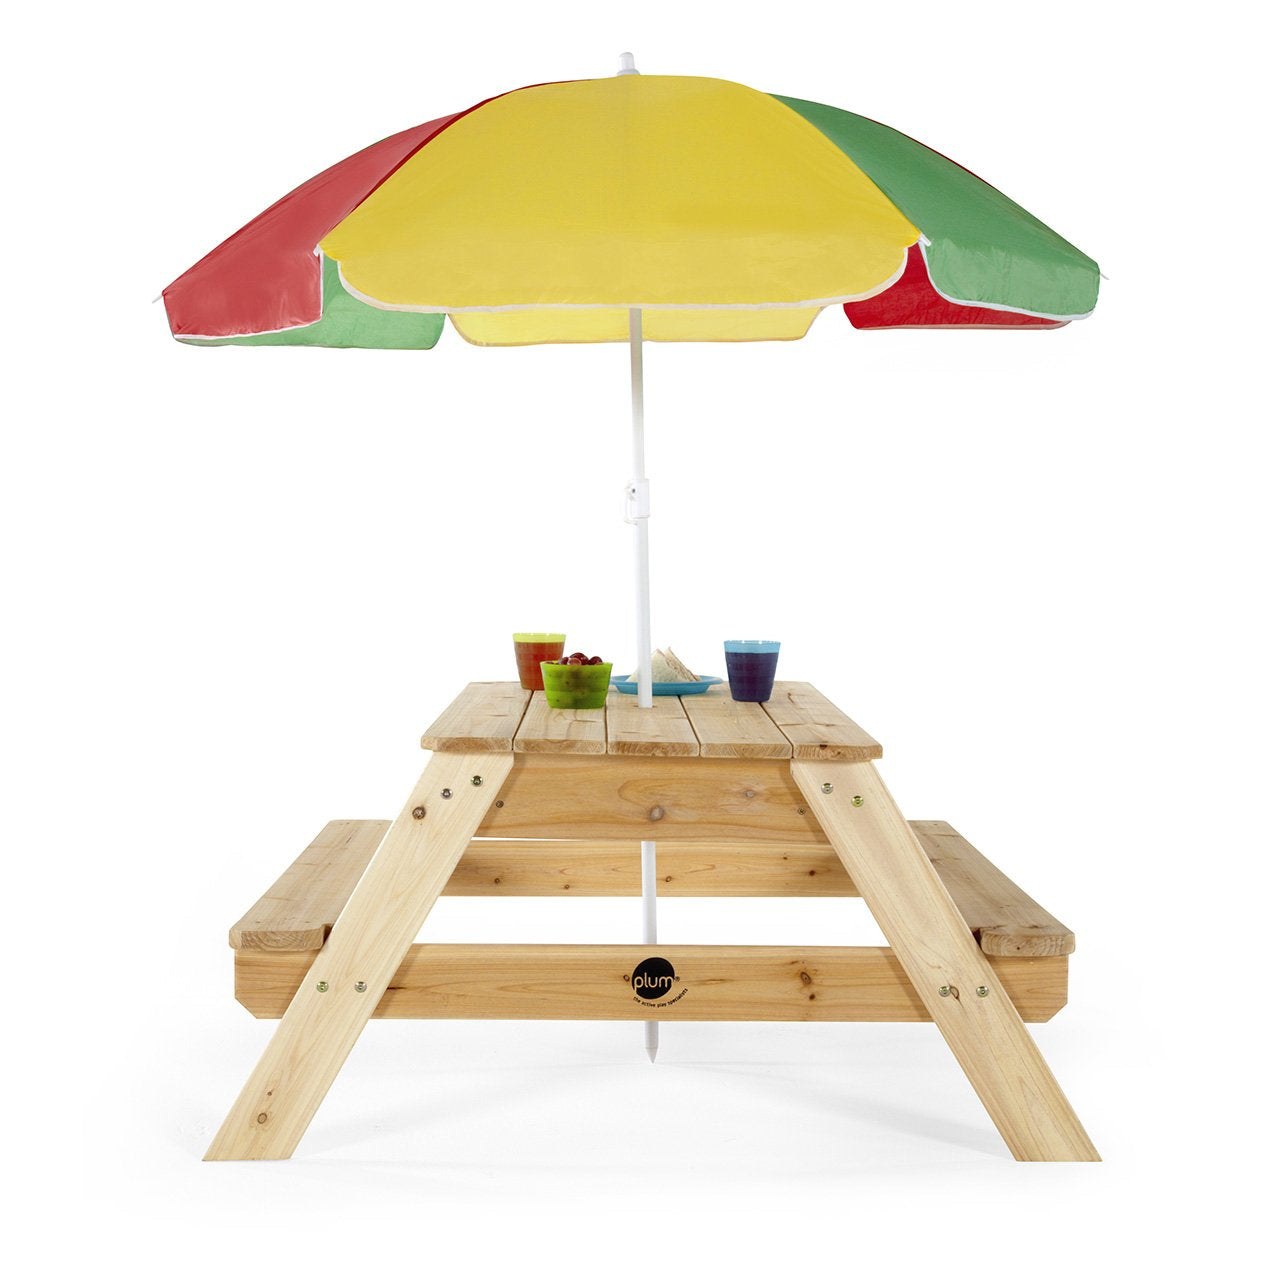 Plum® Picnic Table with Umbrella